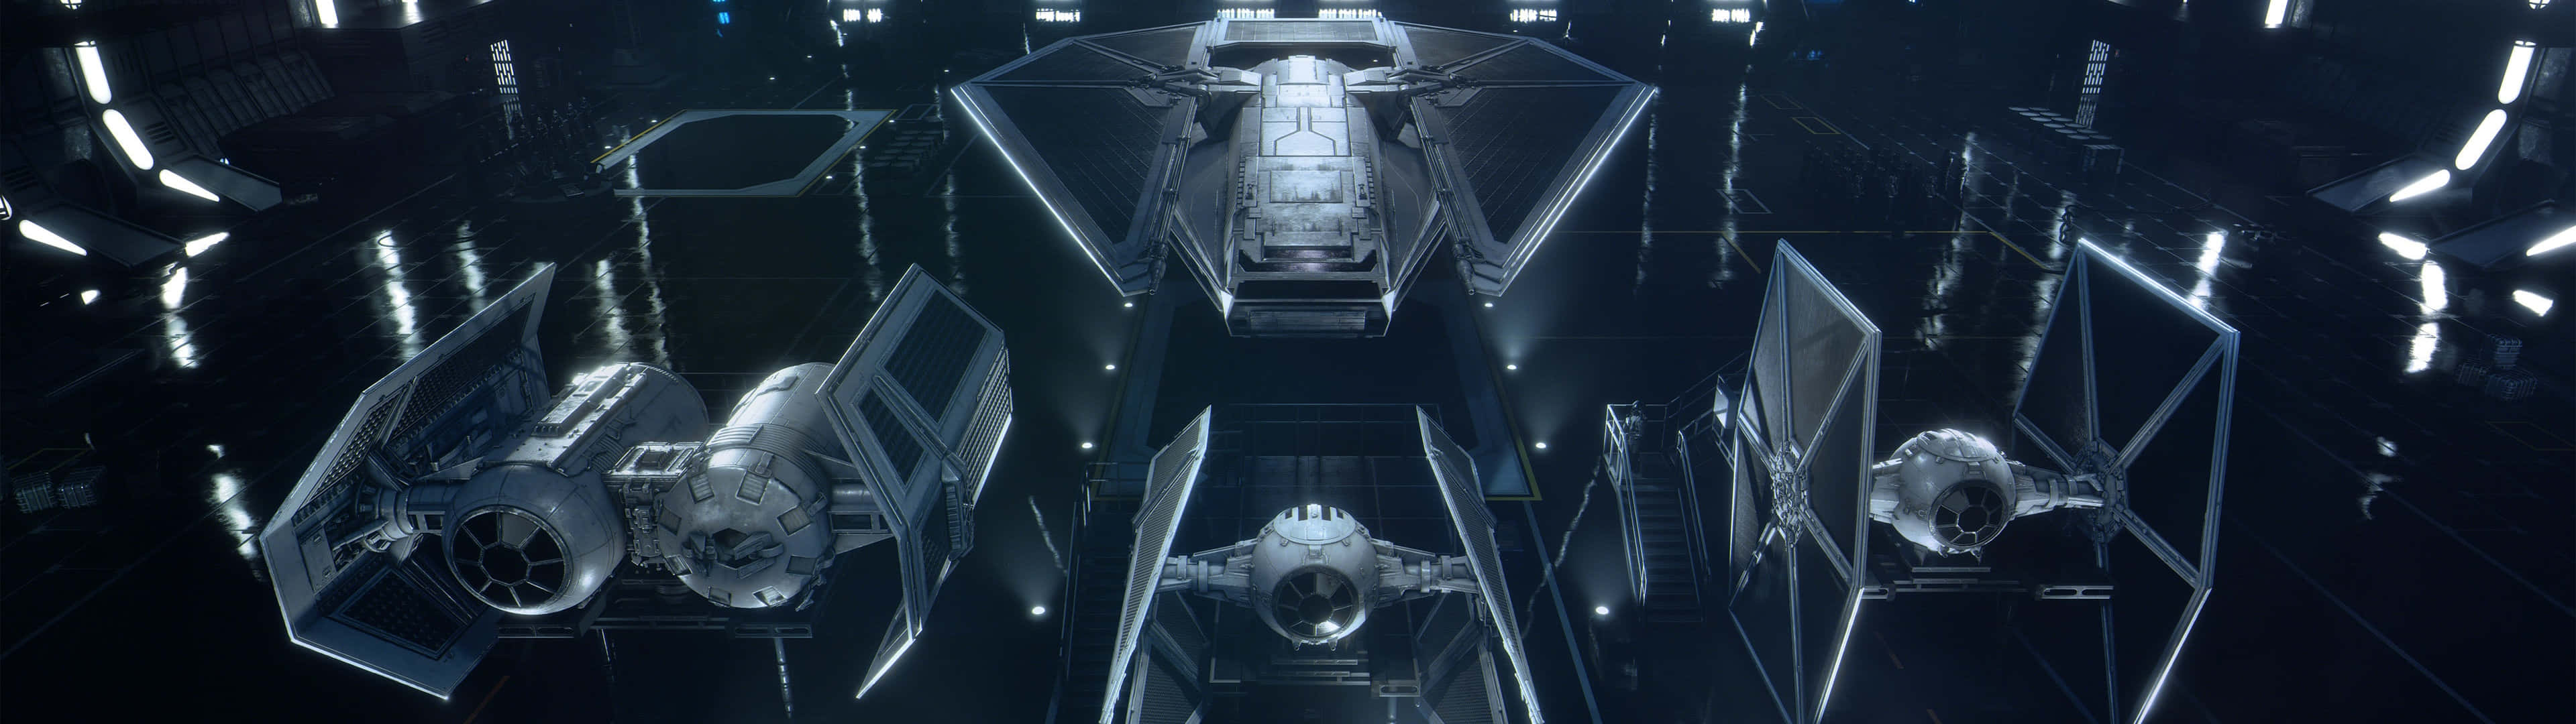 Star Wars Spaceships In A Dark Space Wallpaper